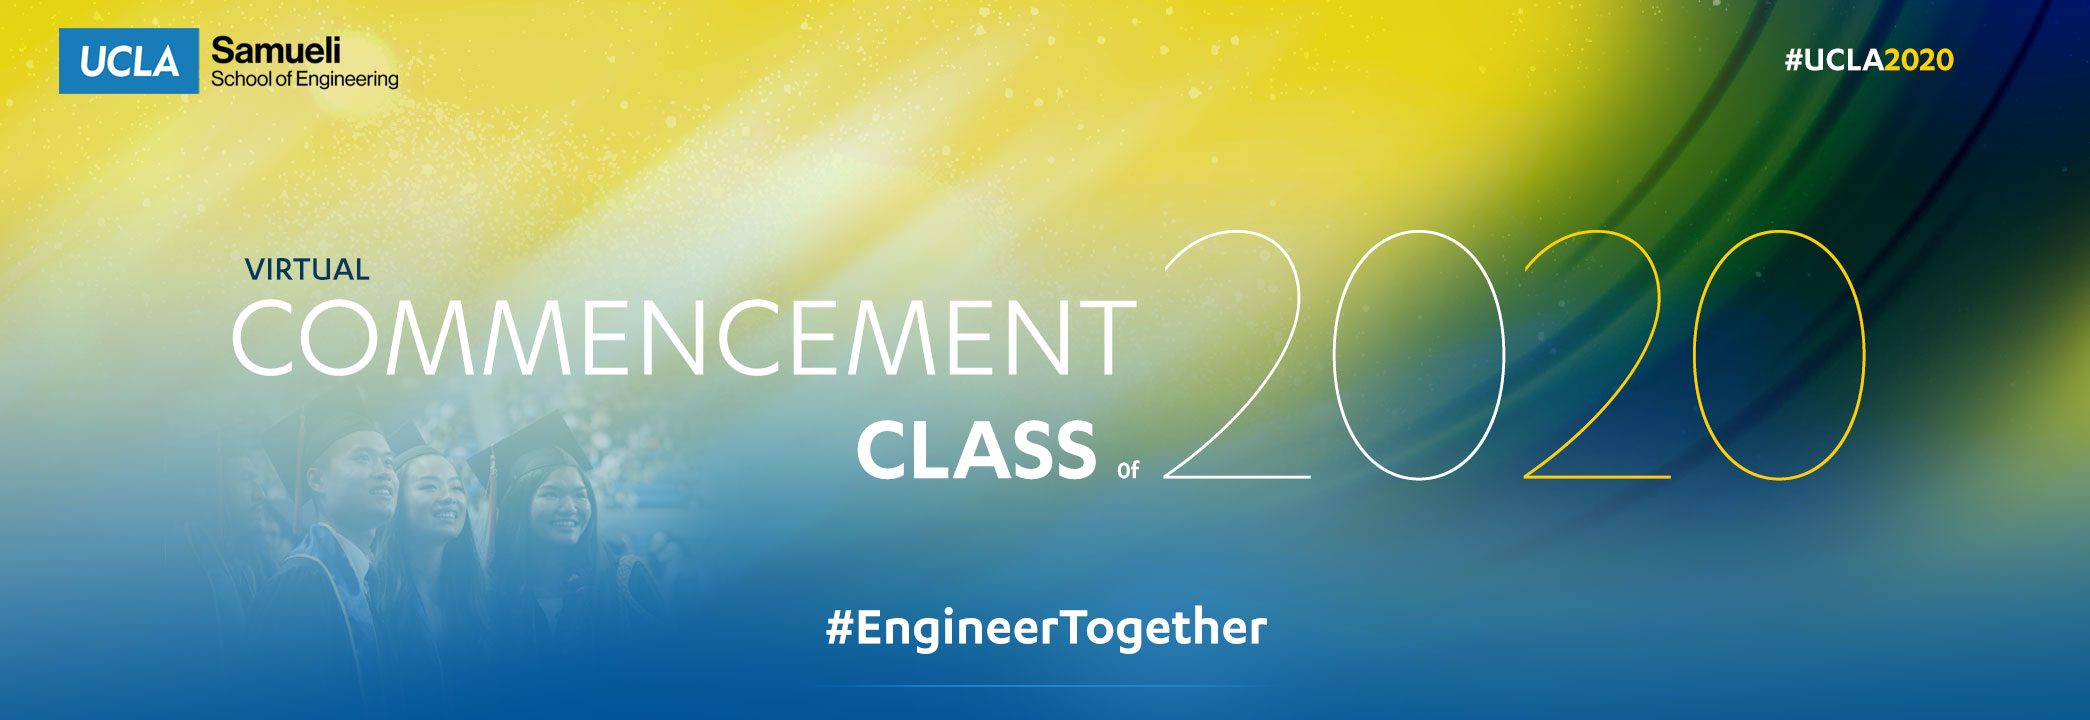 UCLA Samueli Virtual Commencement | Class of 2020